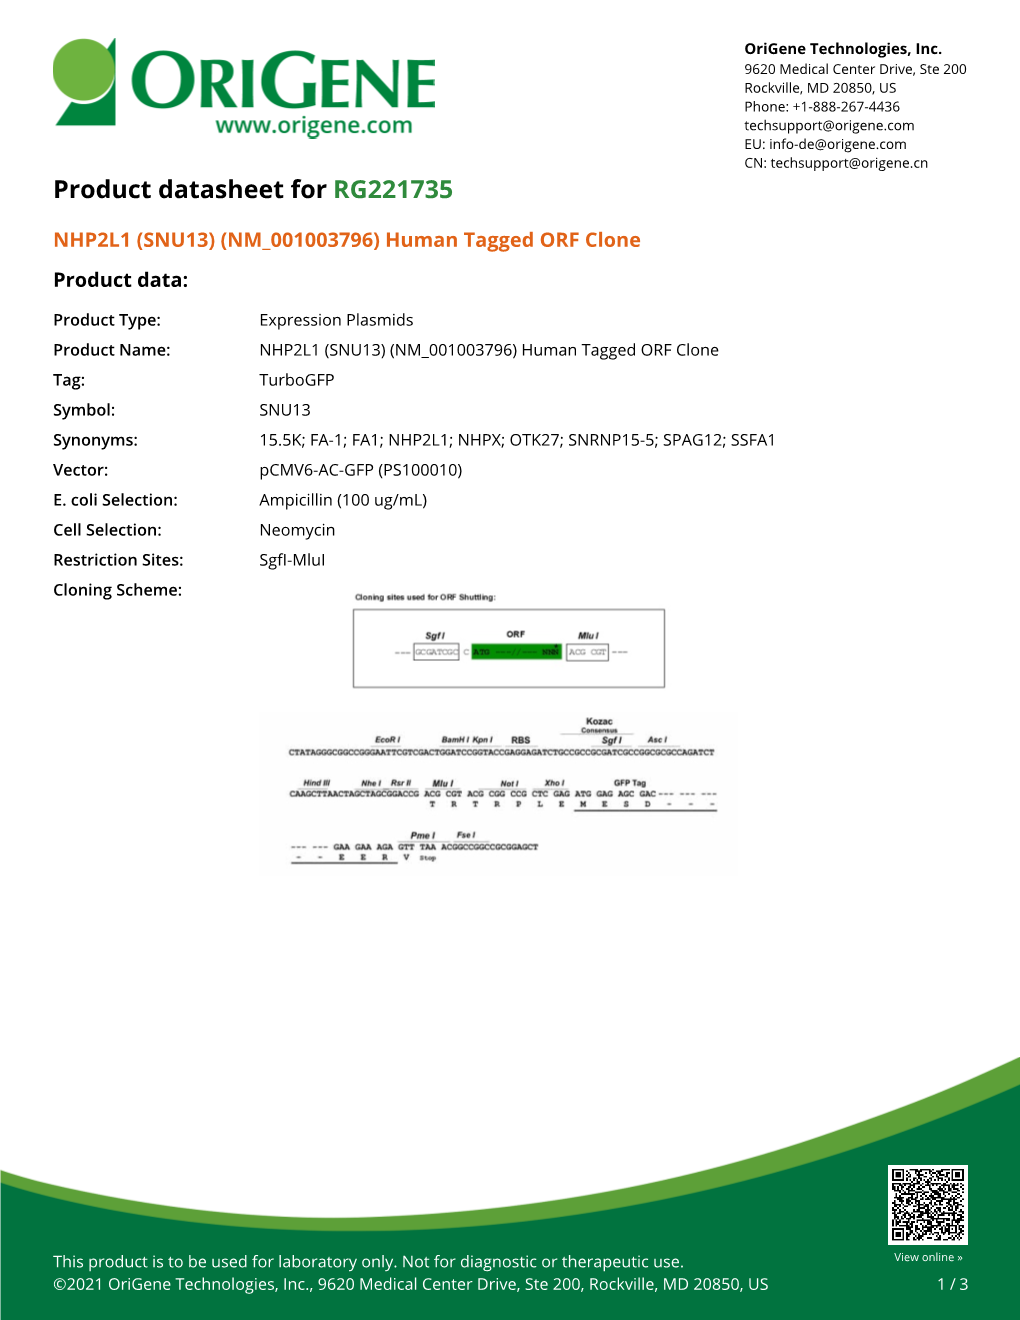 NHP2L1 (SNU13) (NM 001003796) Human Tagged ORF Clone Product Data